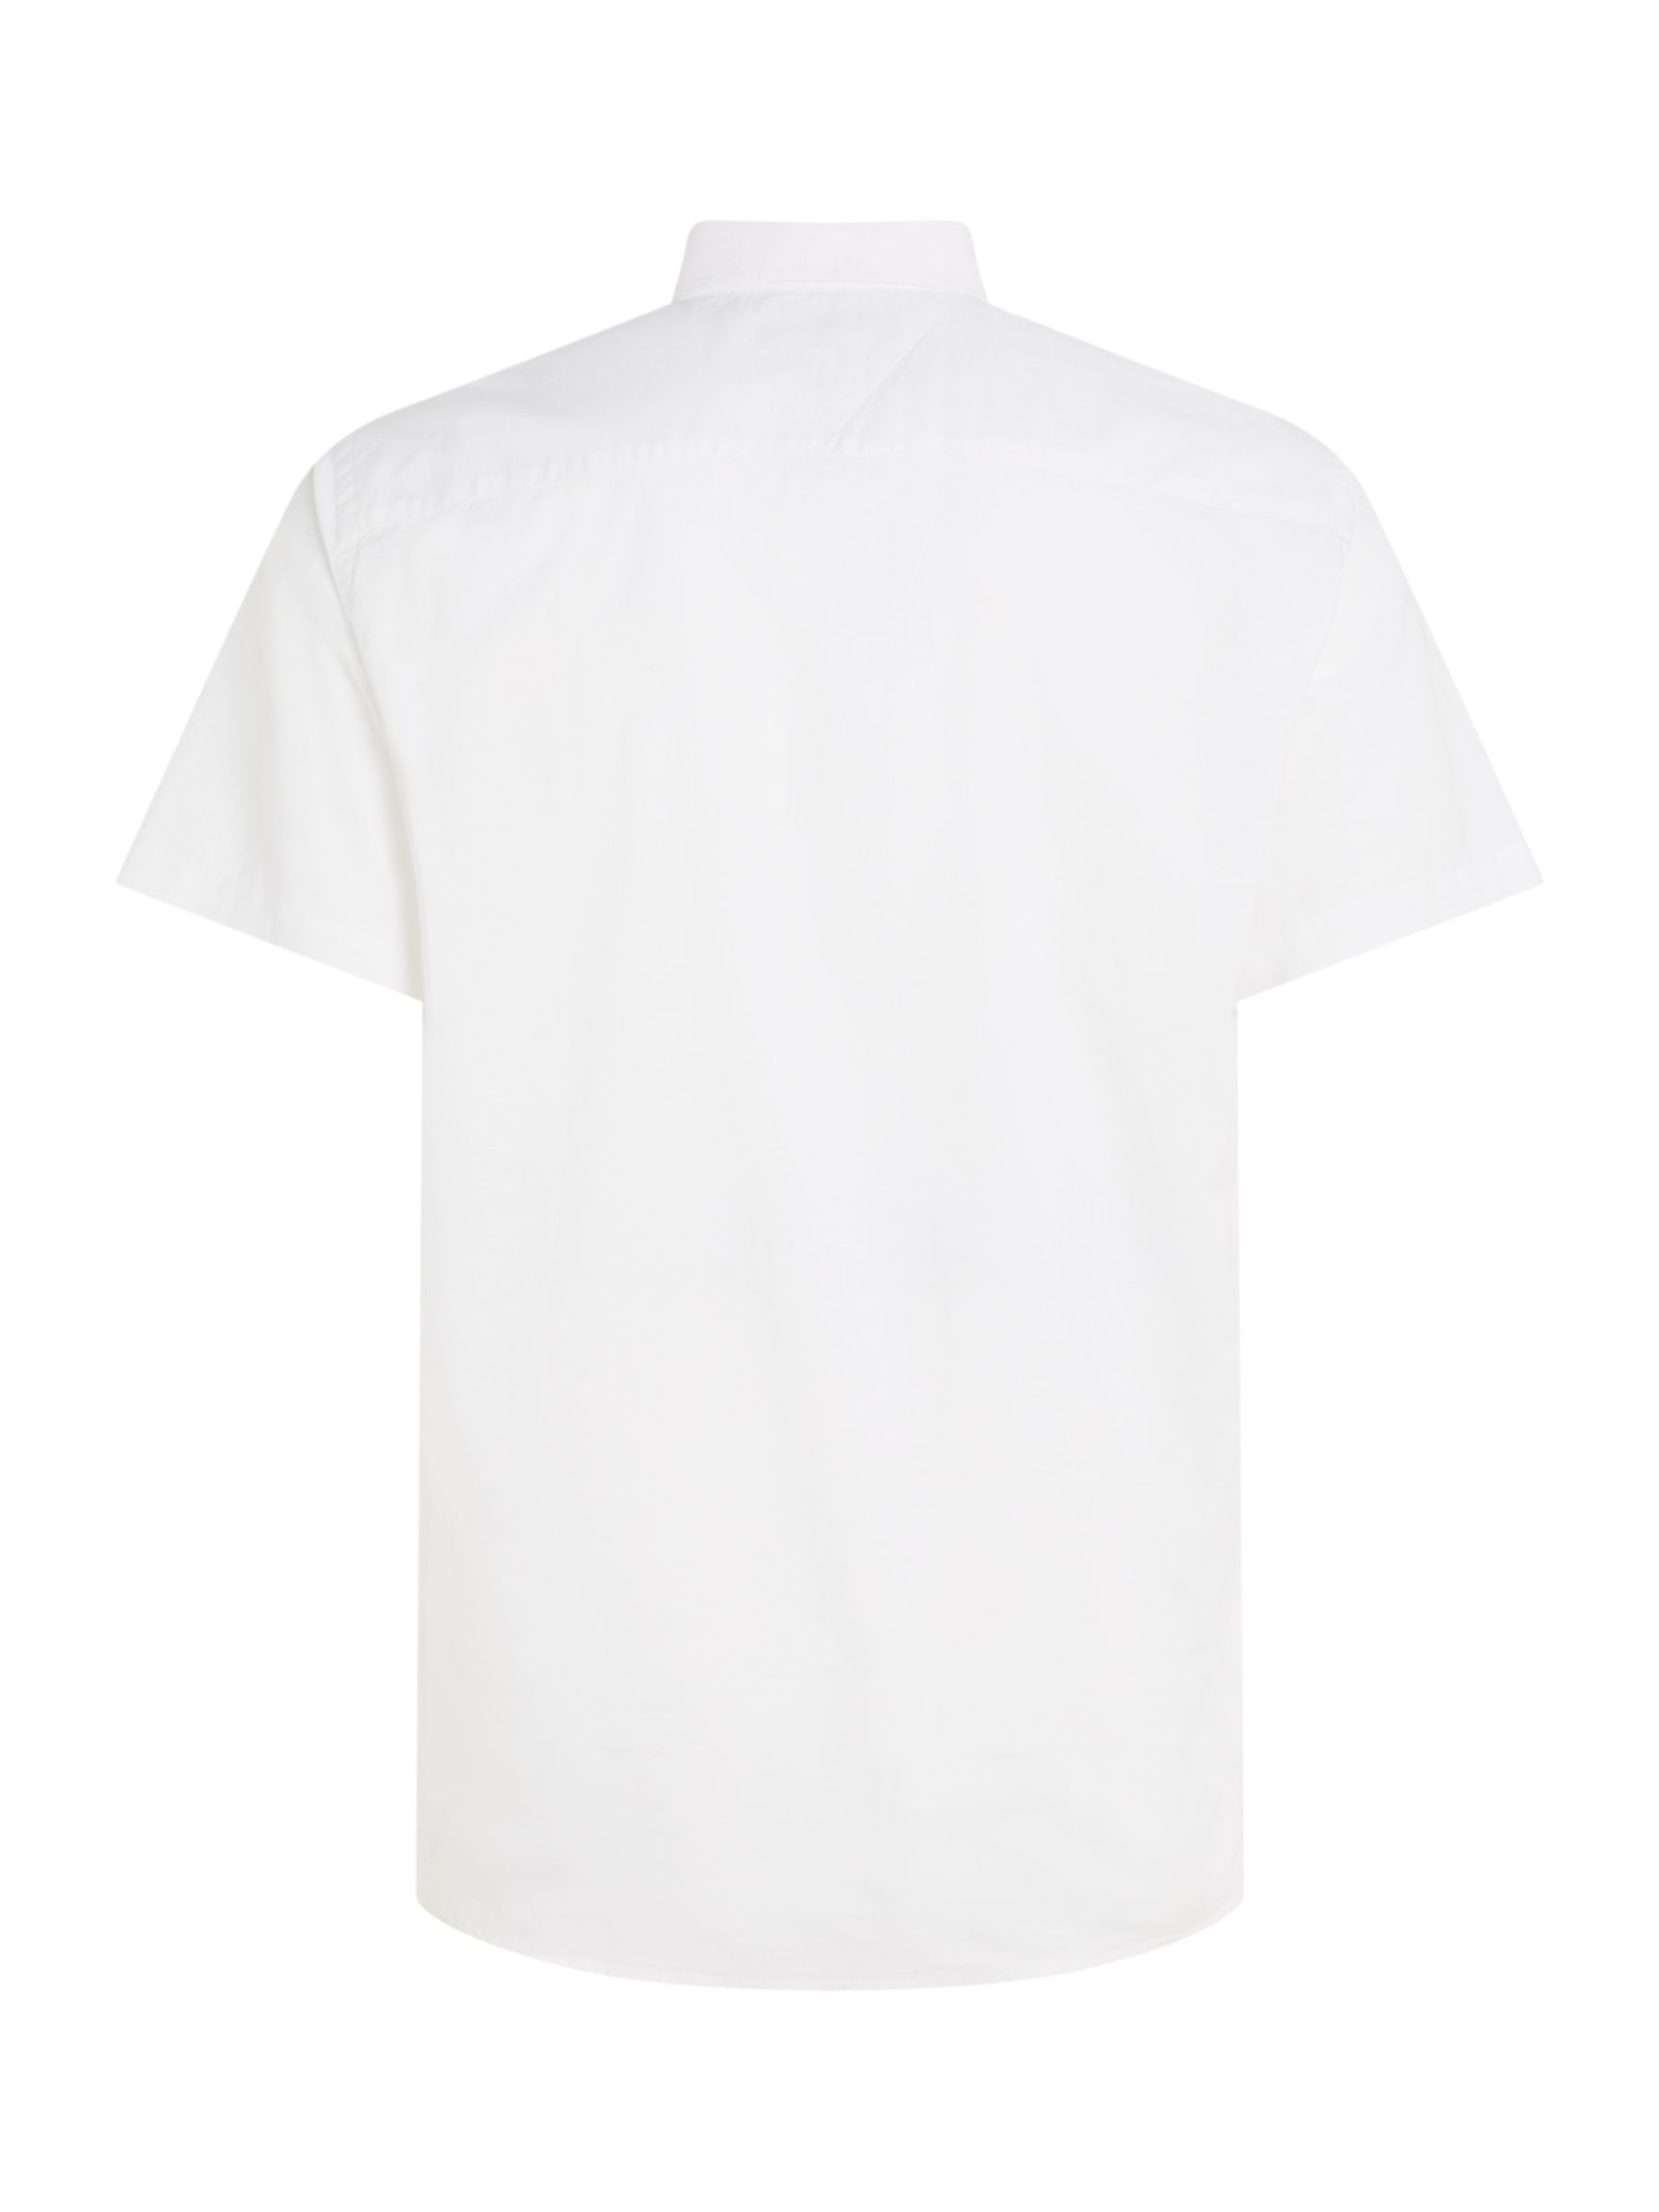 Tommy Hilfiger Linen Short Sleeve Shirt, White